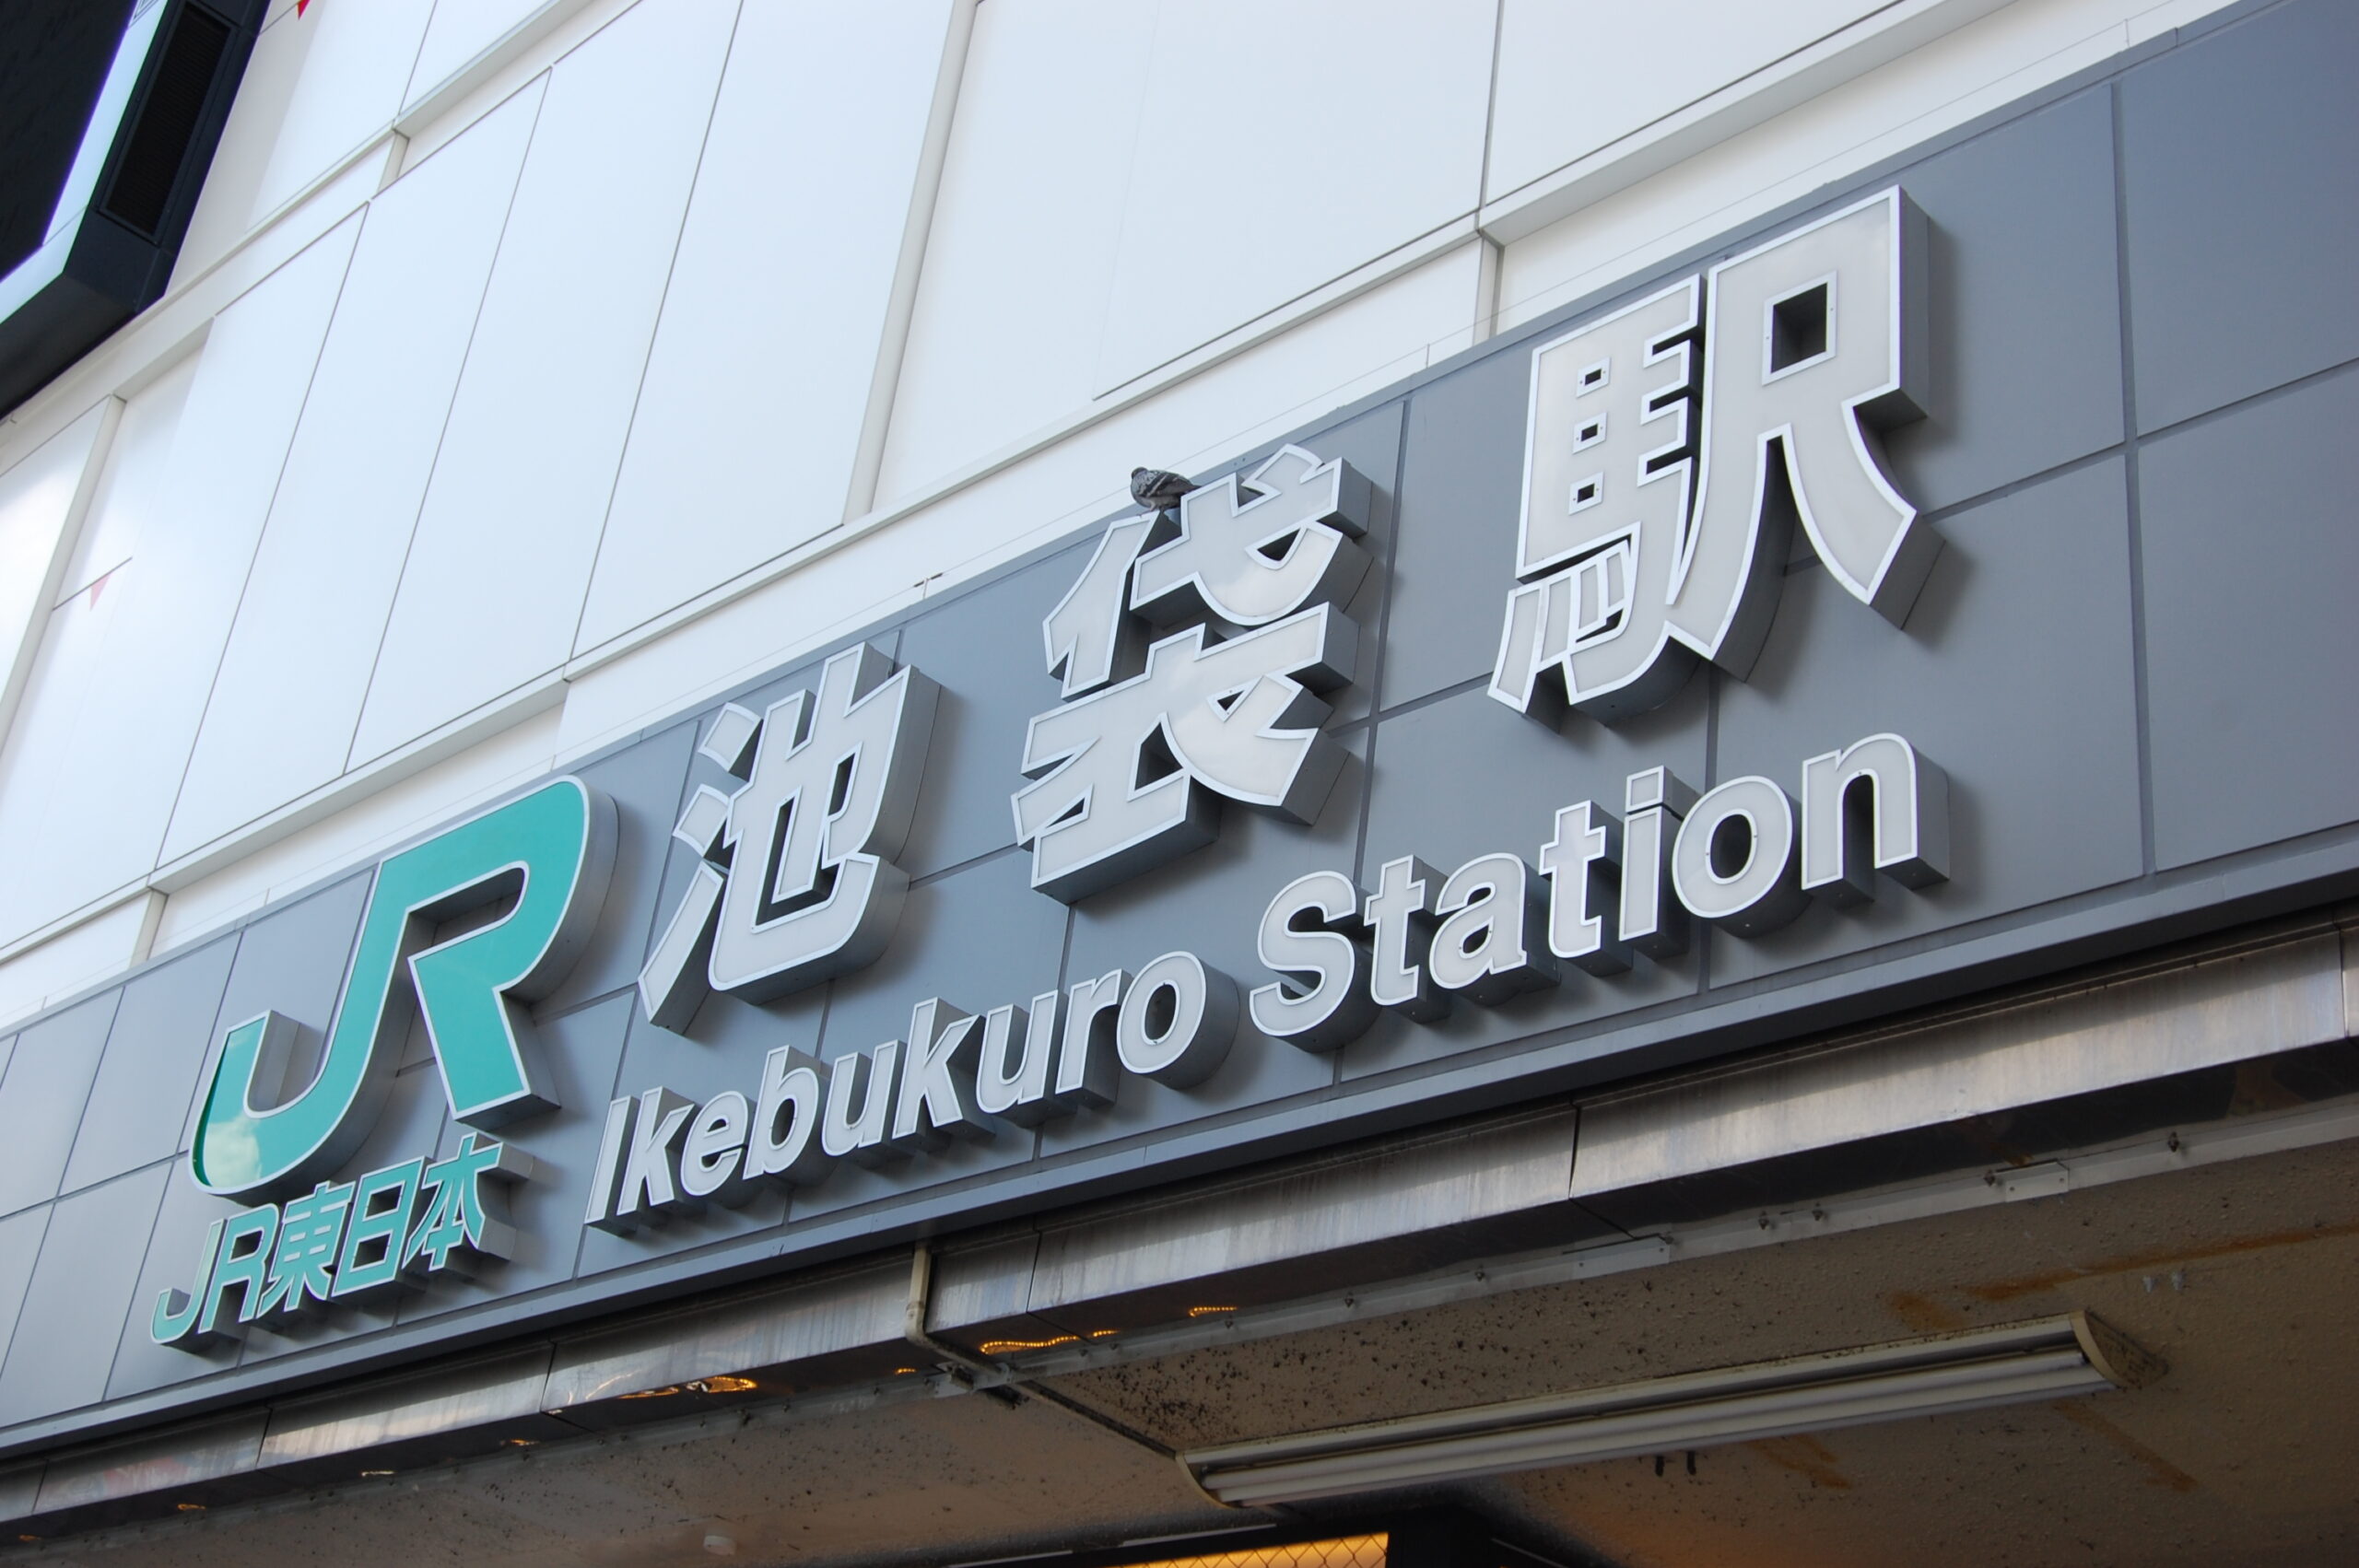 ikebukuro station